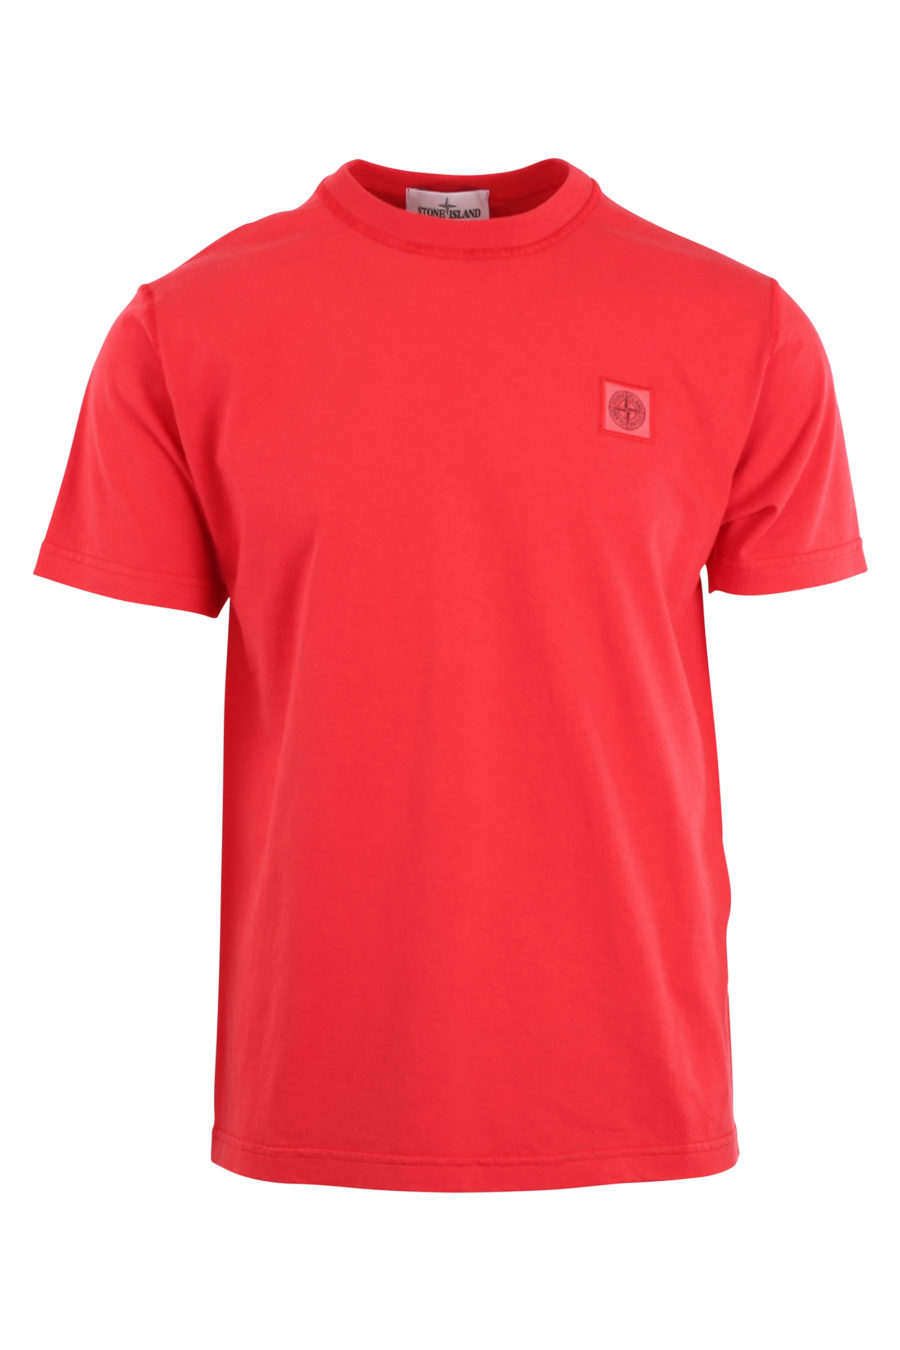 Camiseta roja con logo parche - IMG 9695